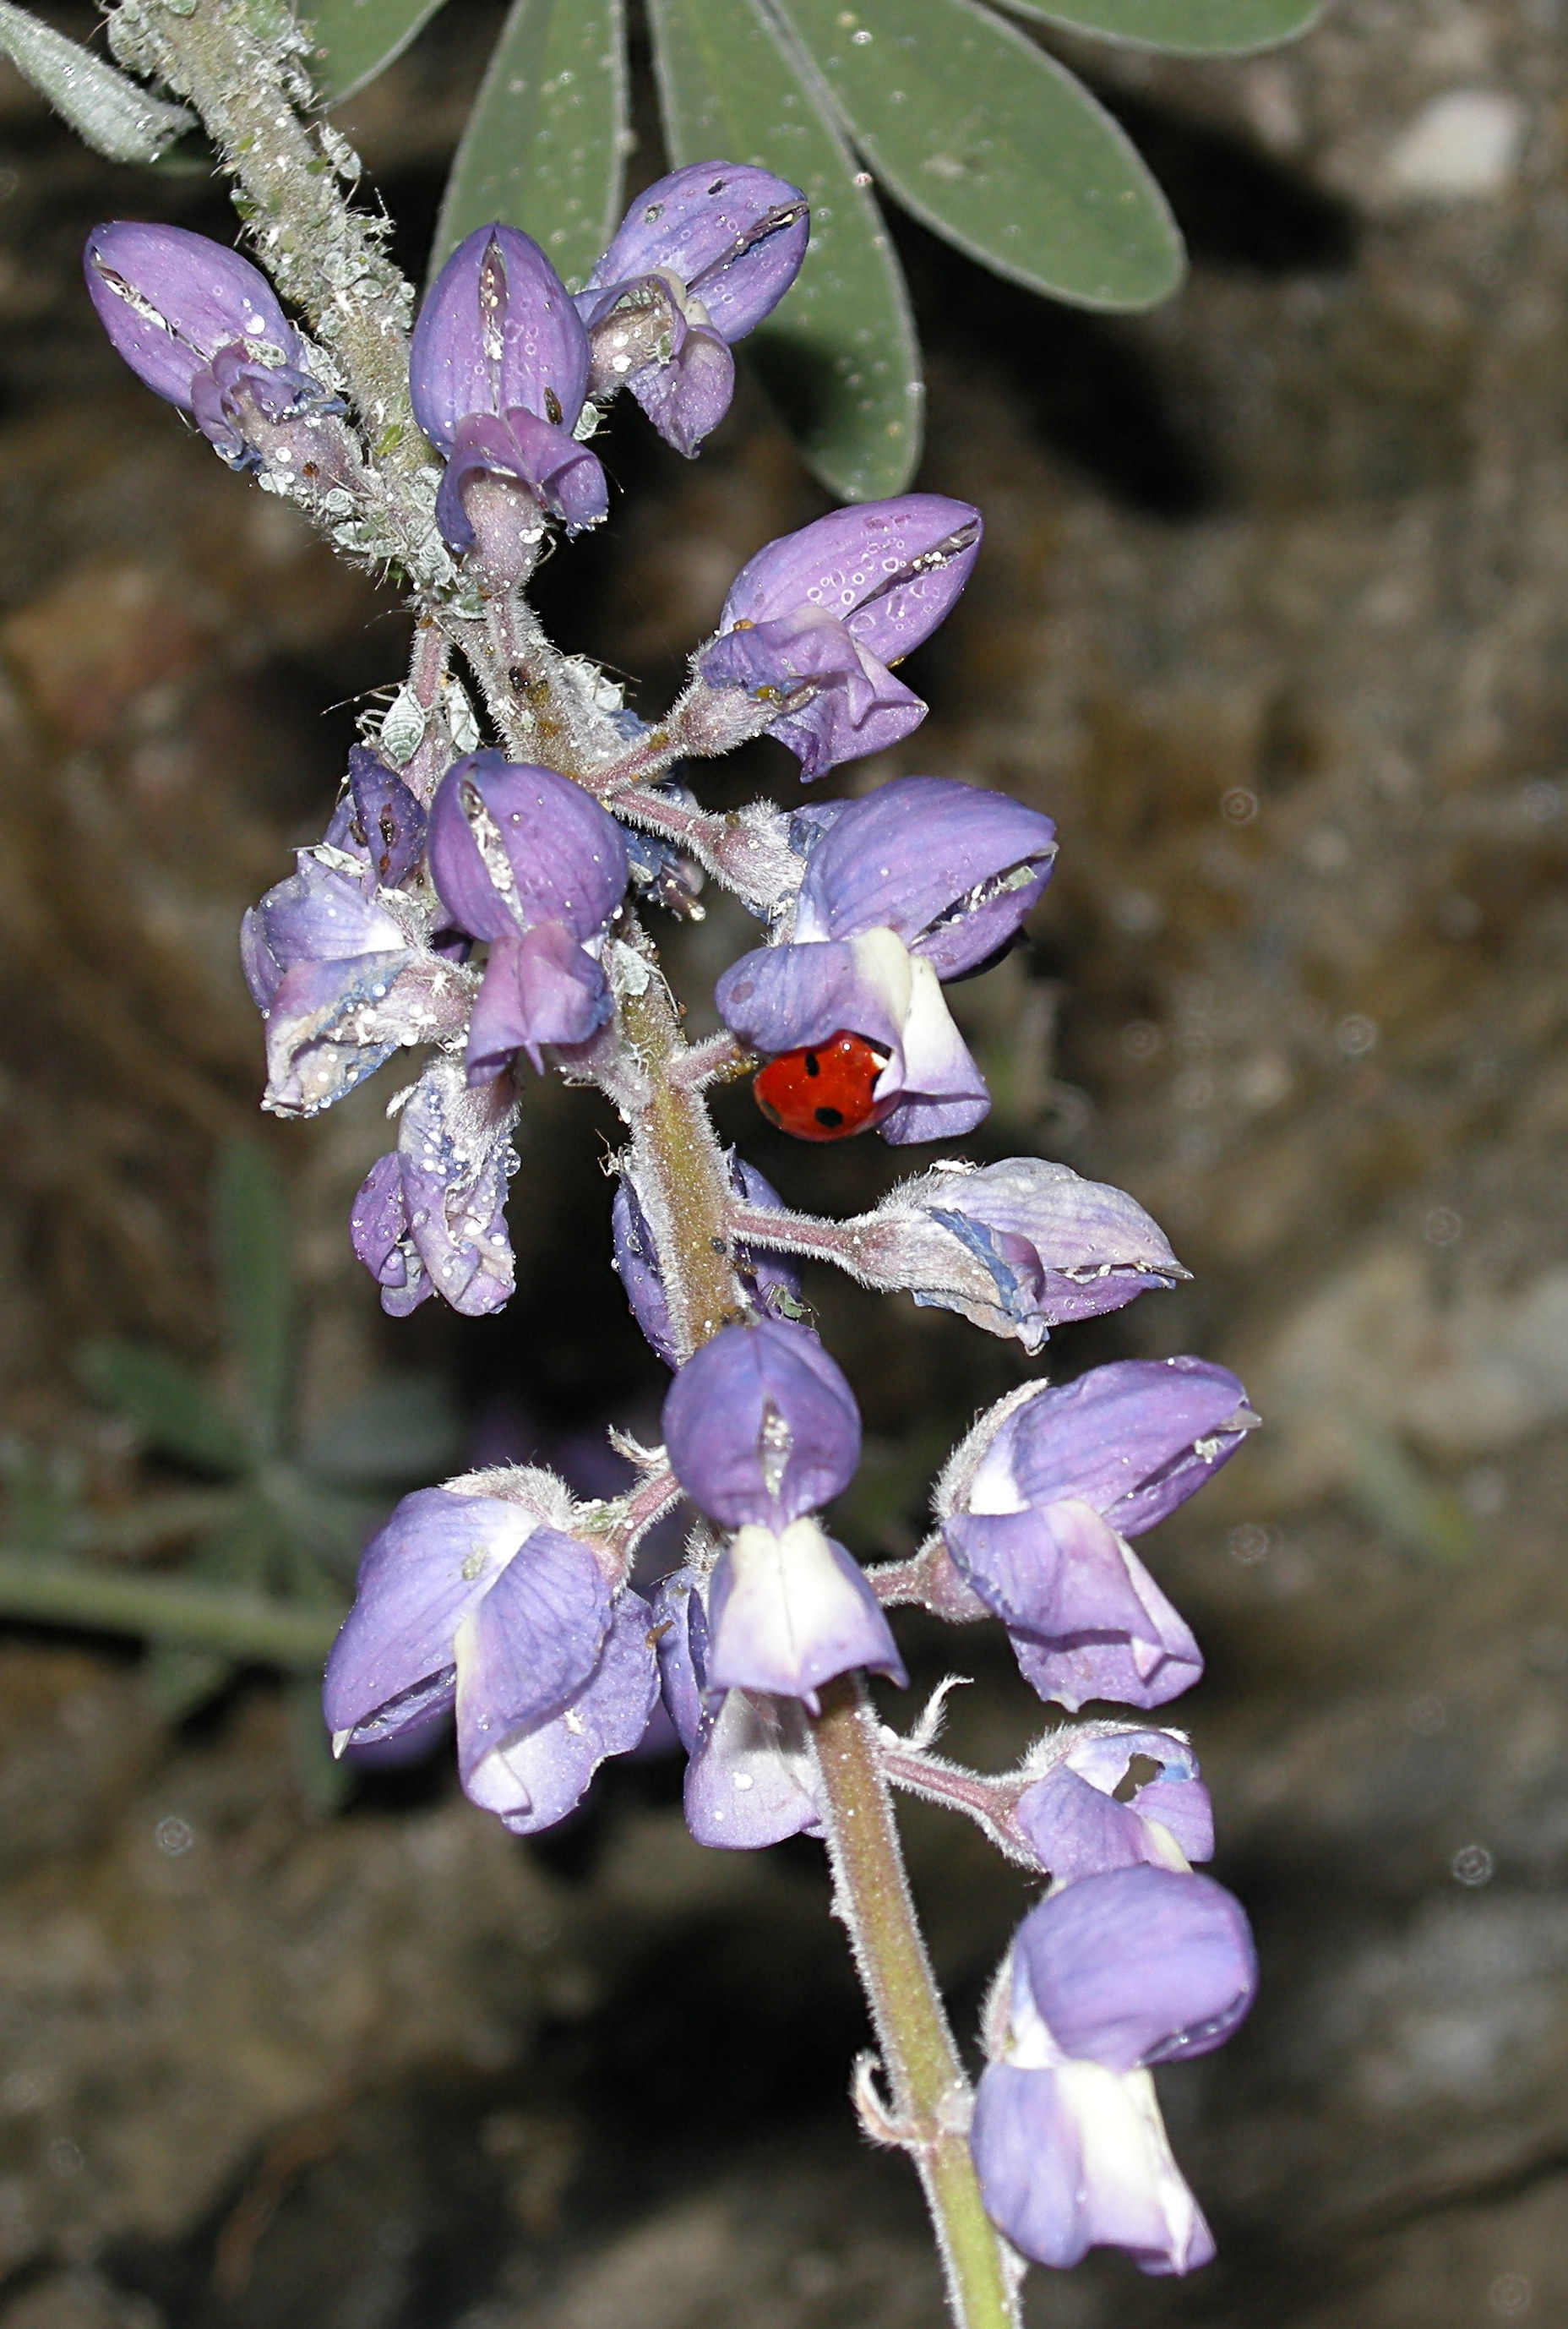 Ladybug on Lupine with Apids